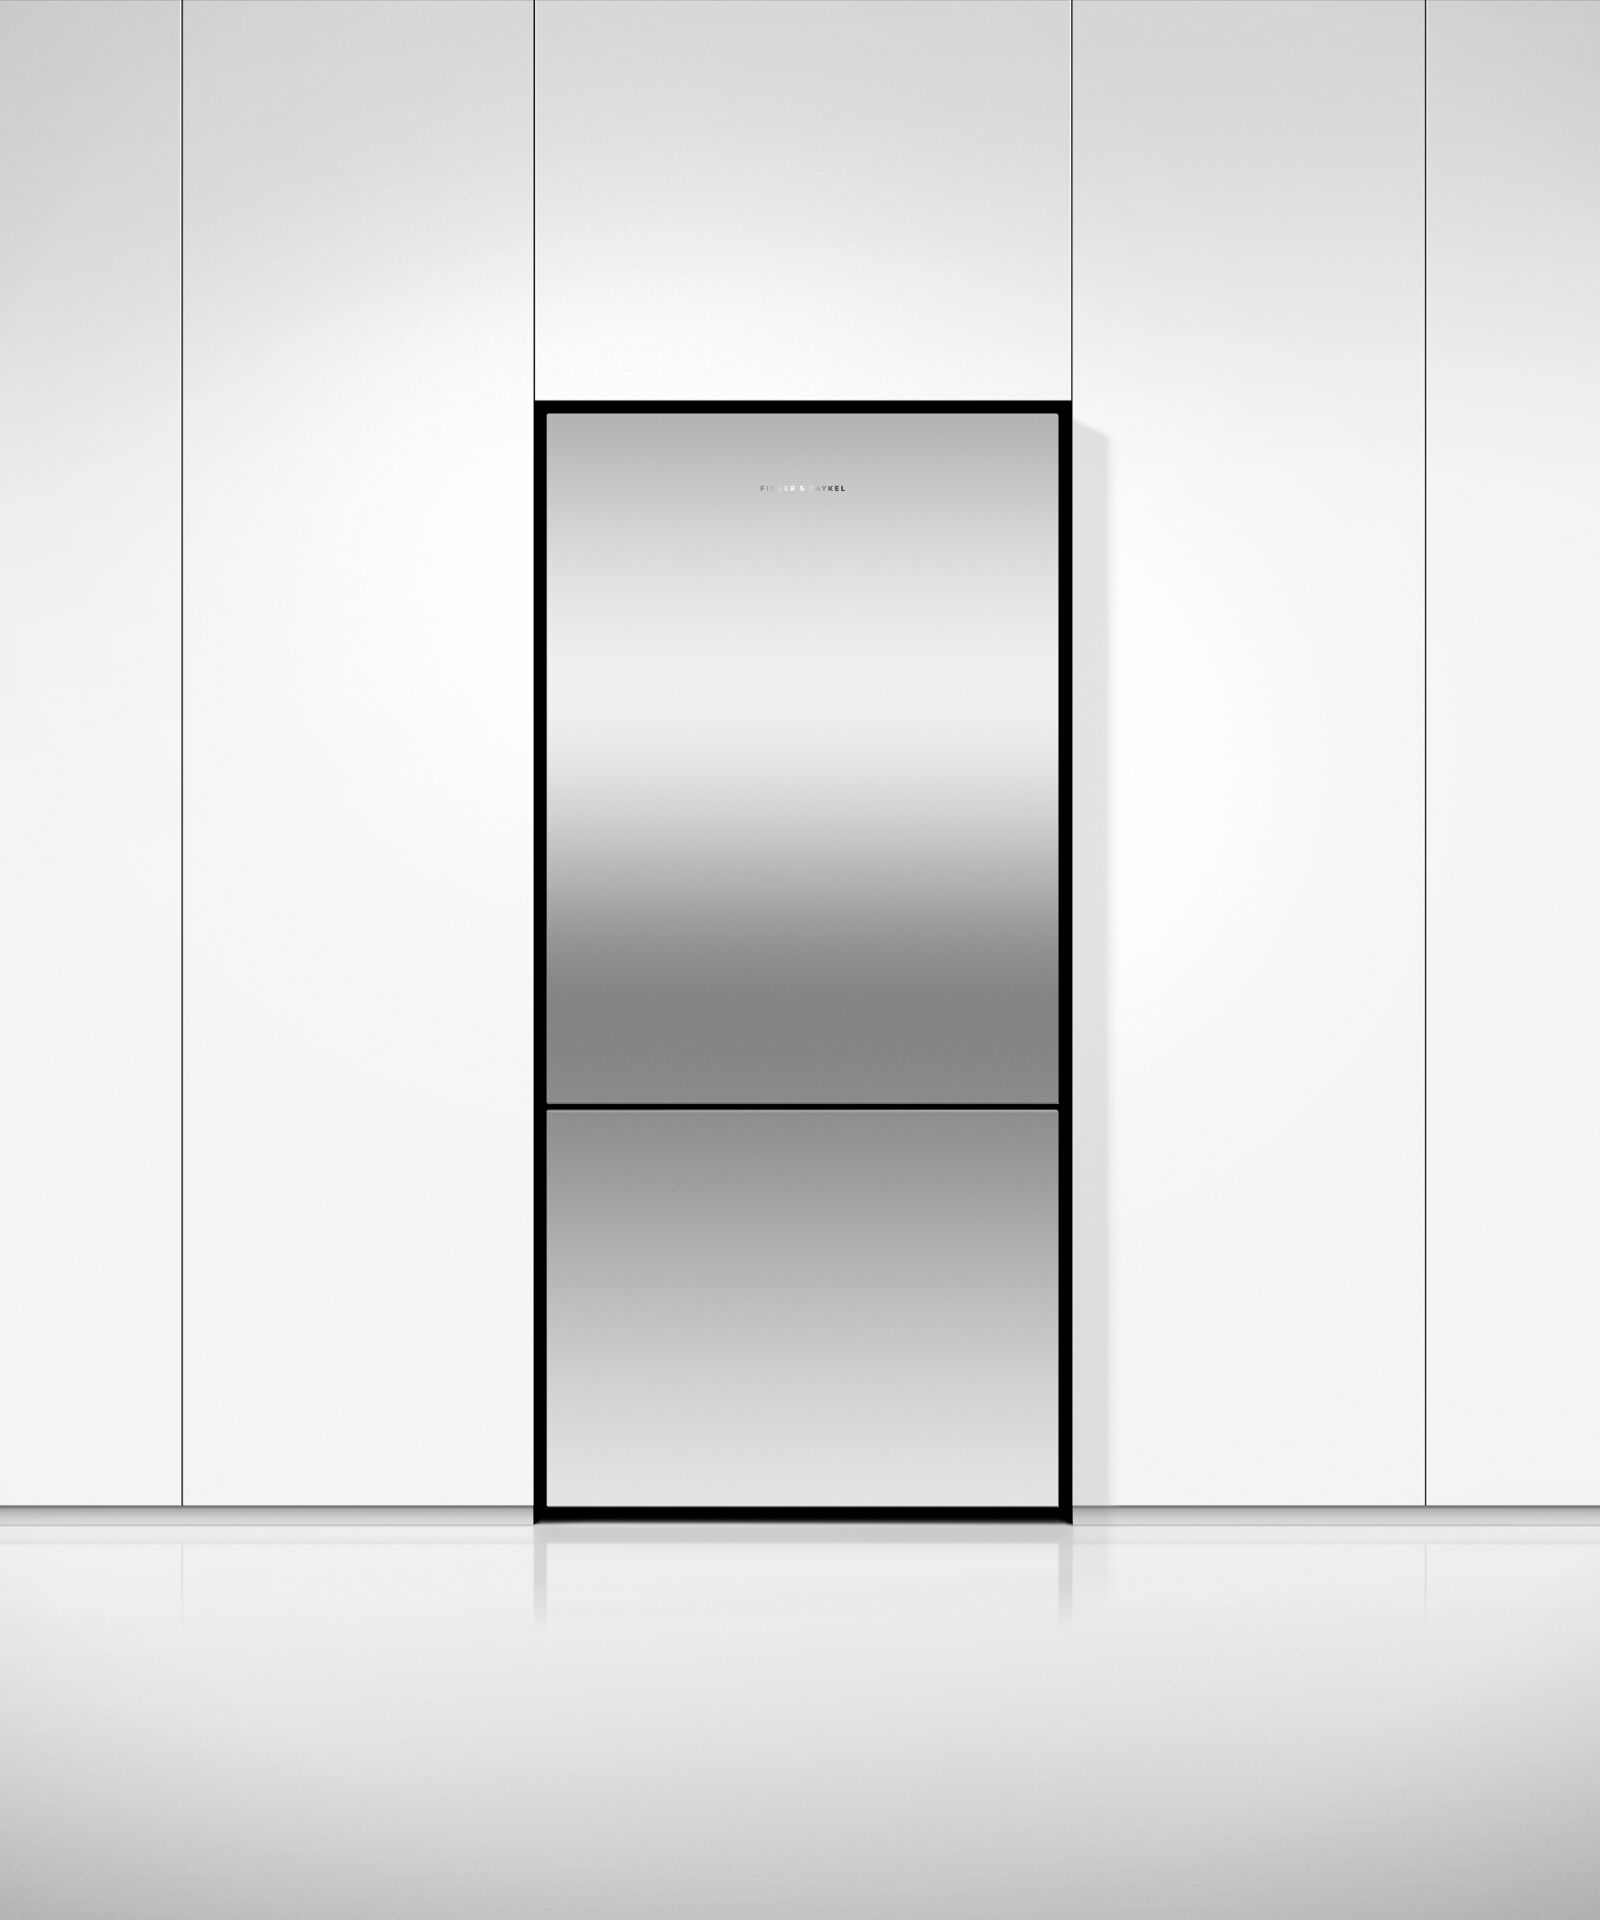 獨立式雪櫃冷凍櫃, 79cm gallery image 3.0